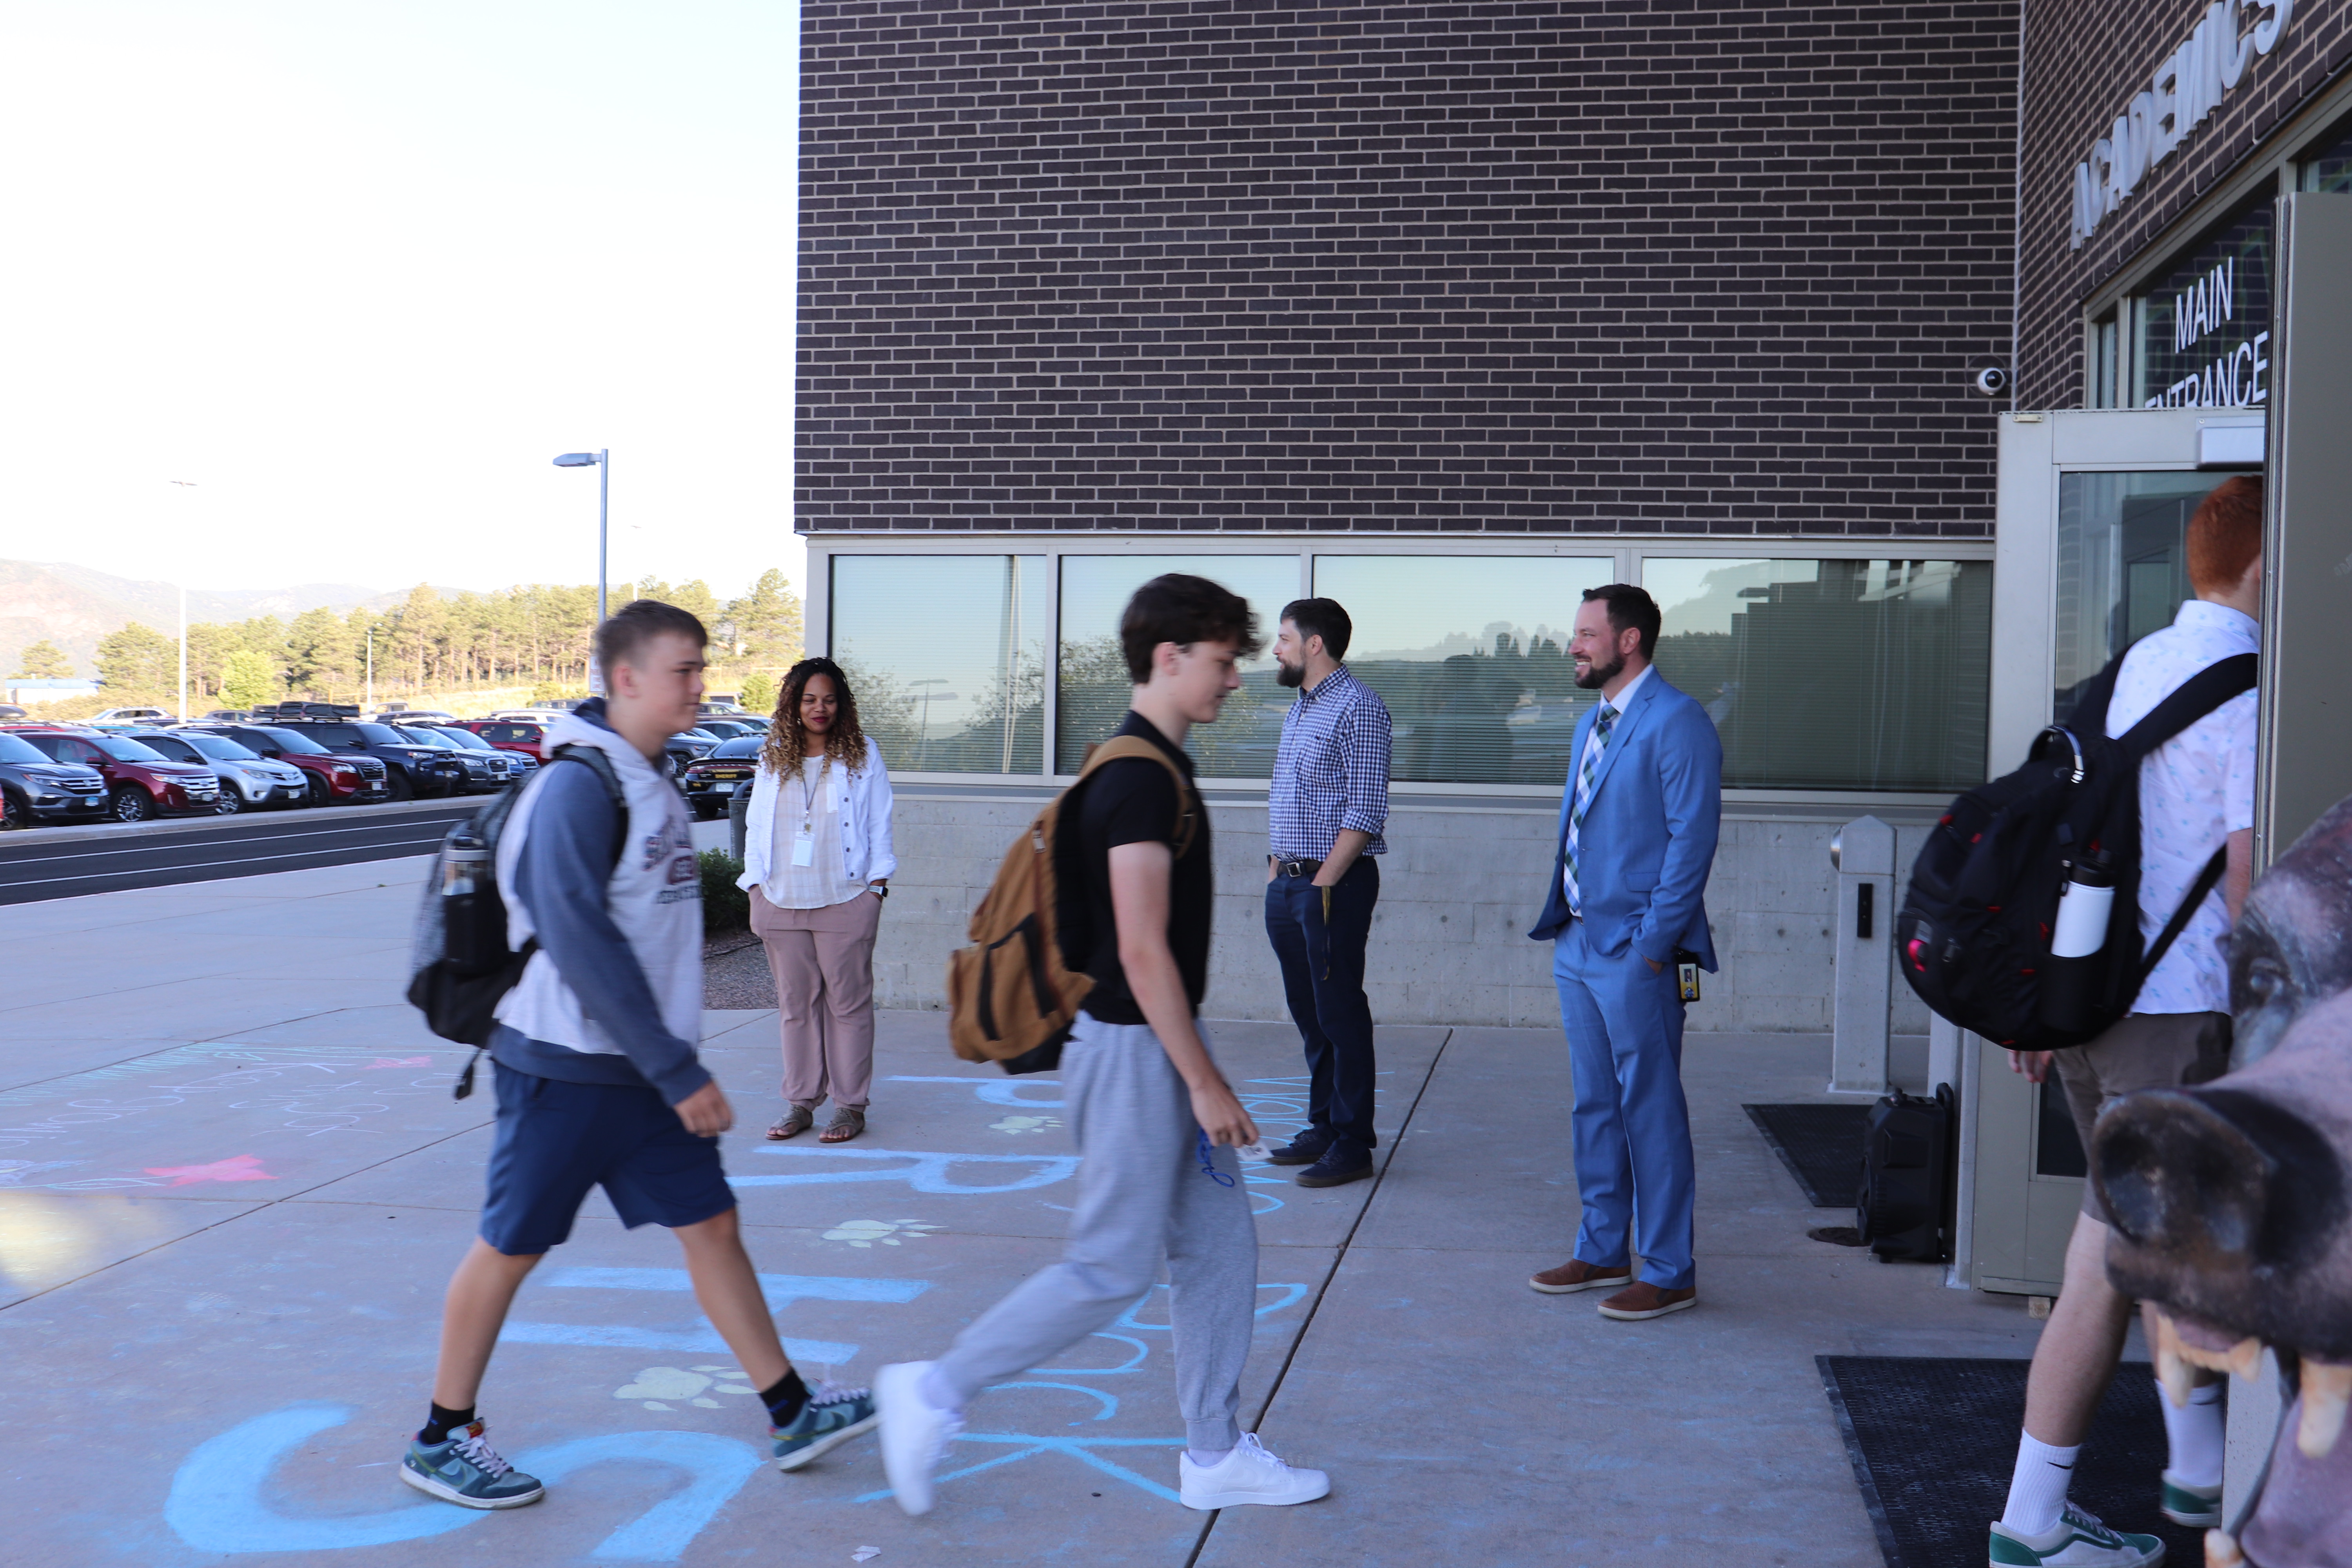 Students walk into school